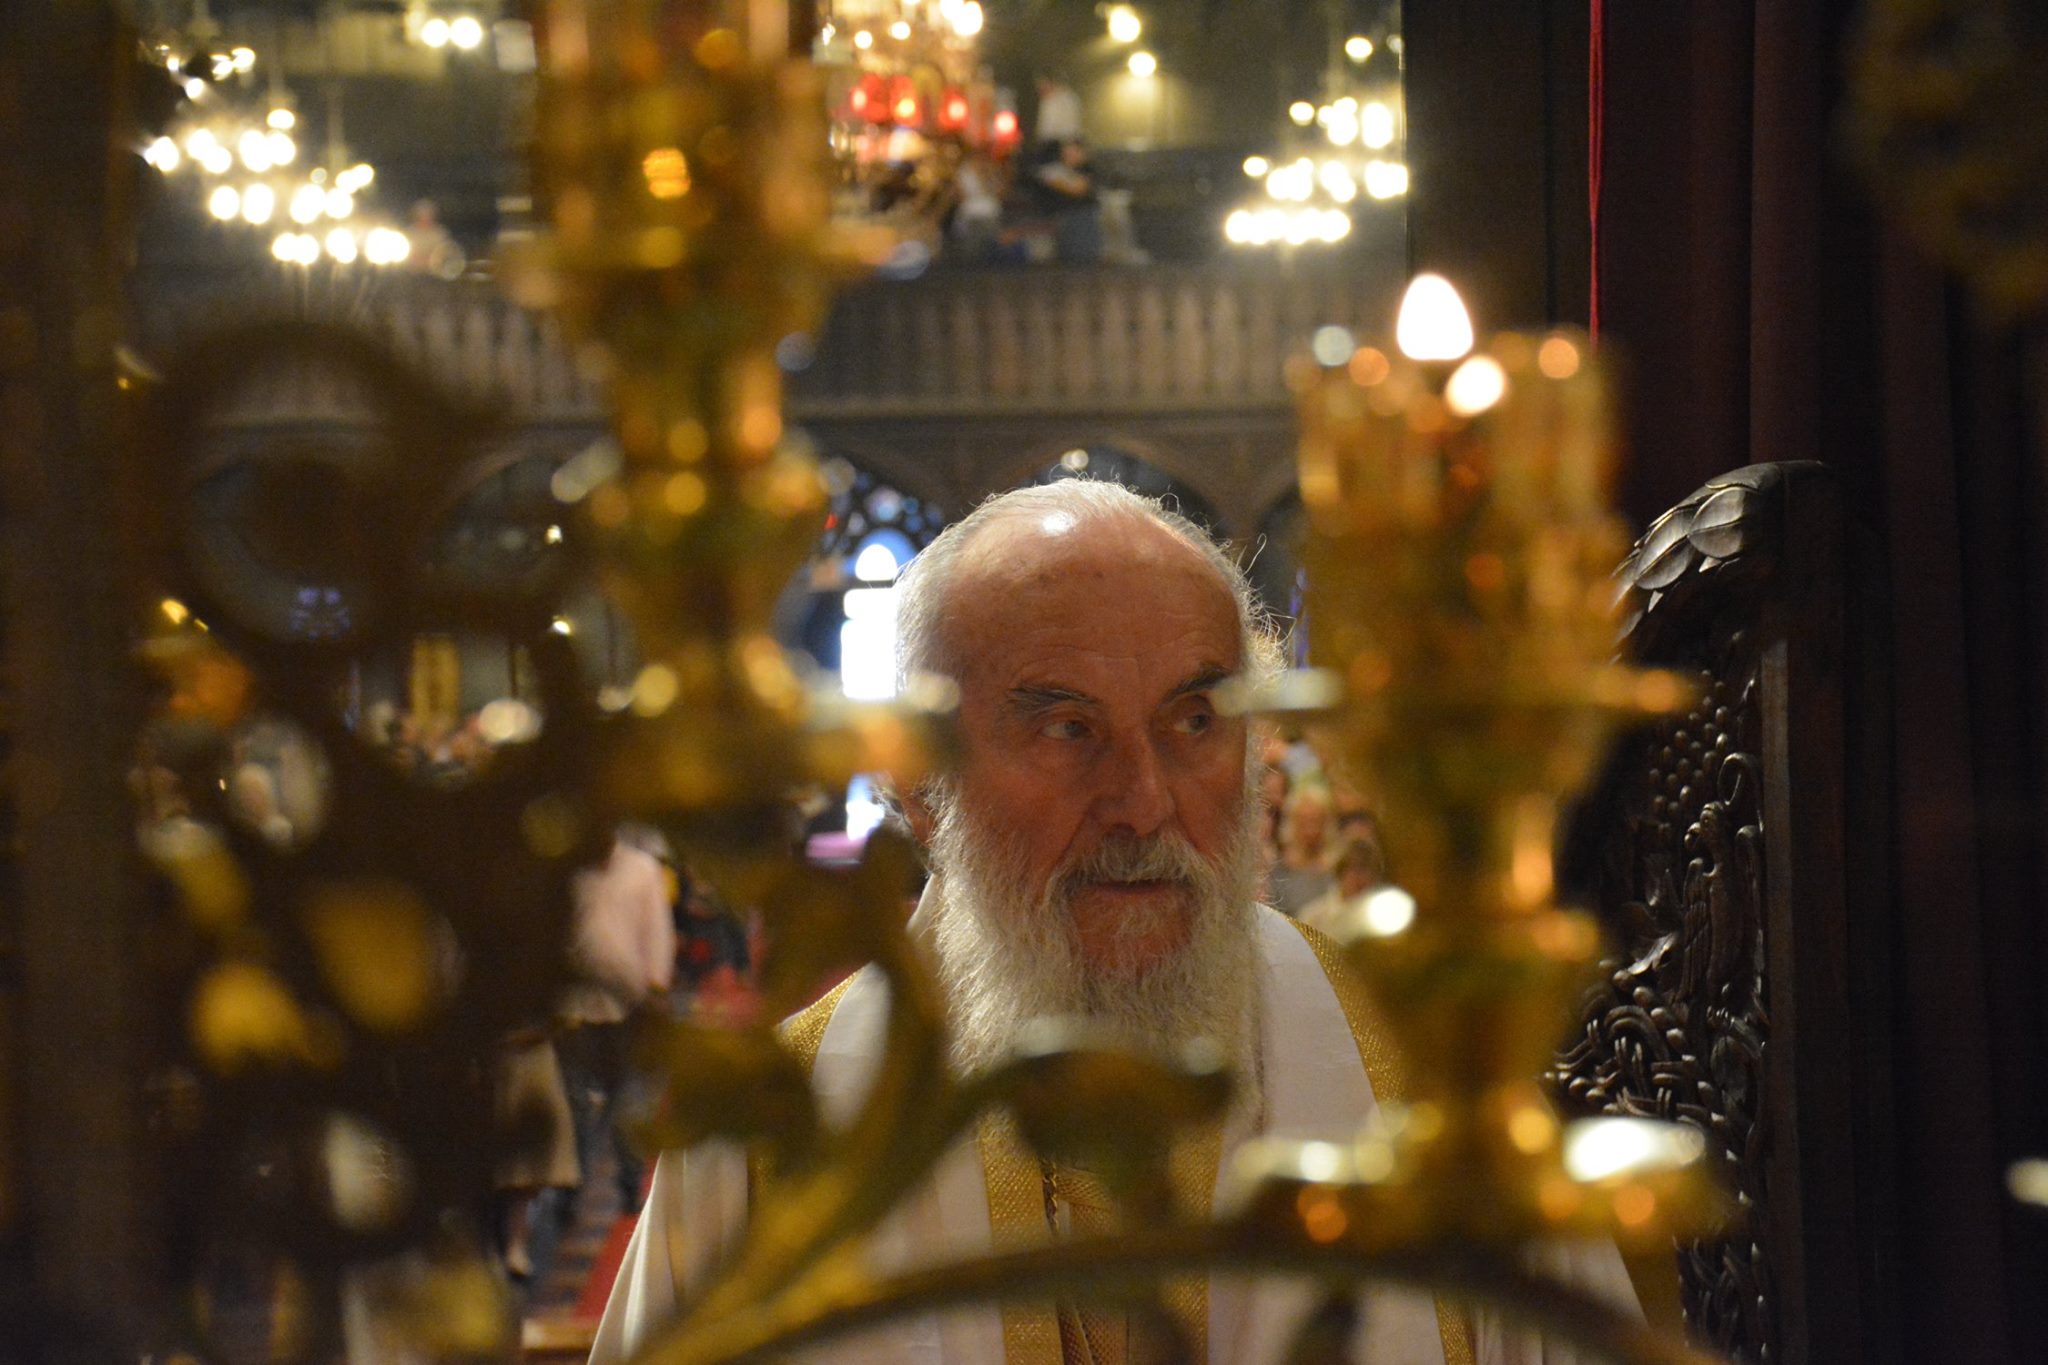 Serbian Patriarch Irinej reposed in the Lord